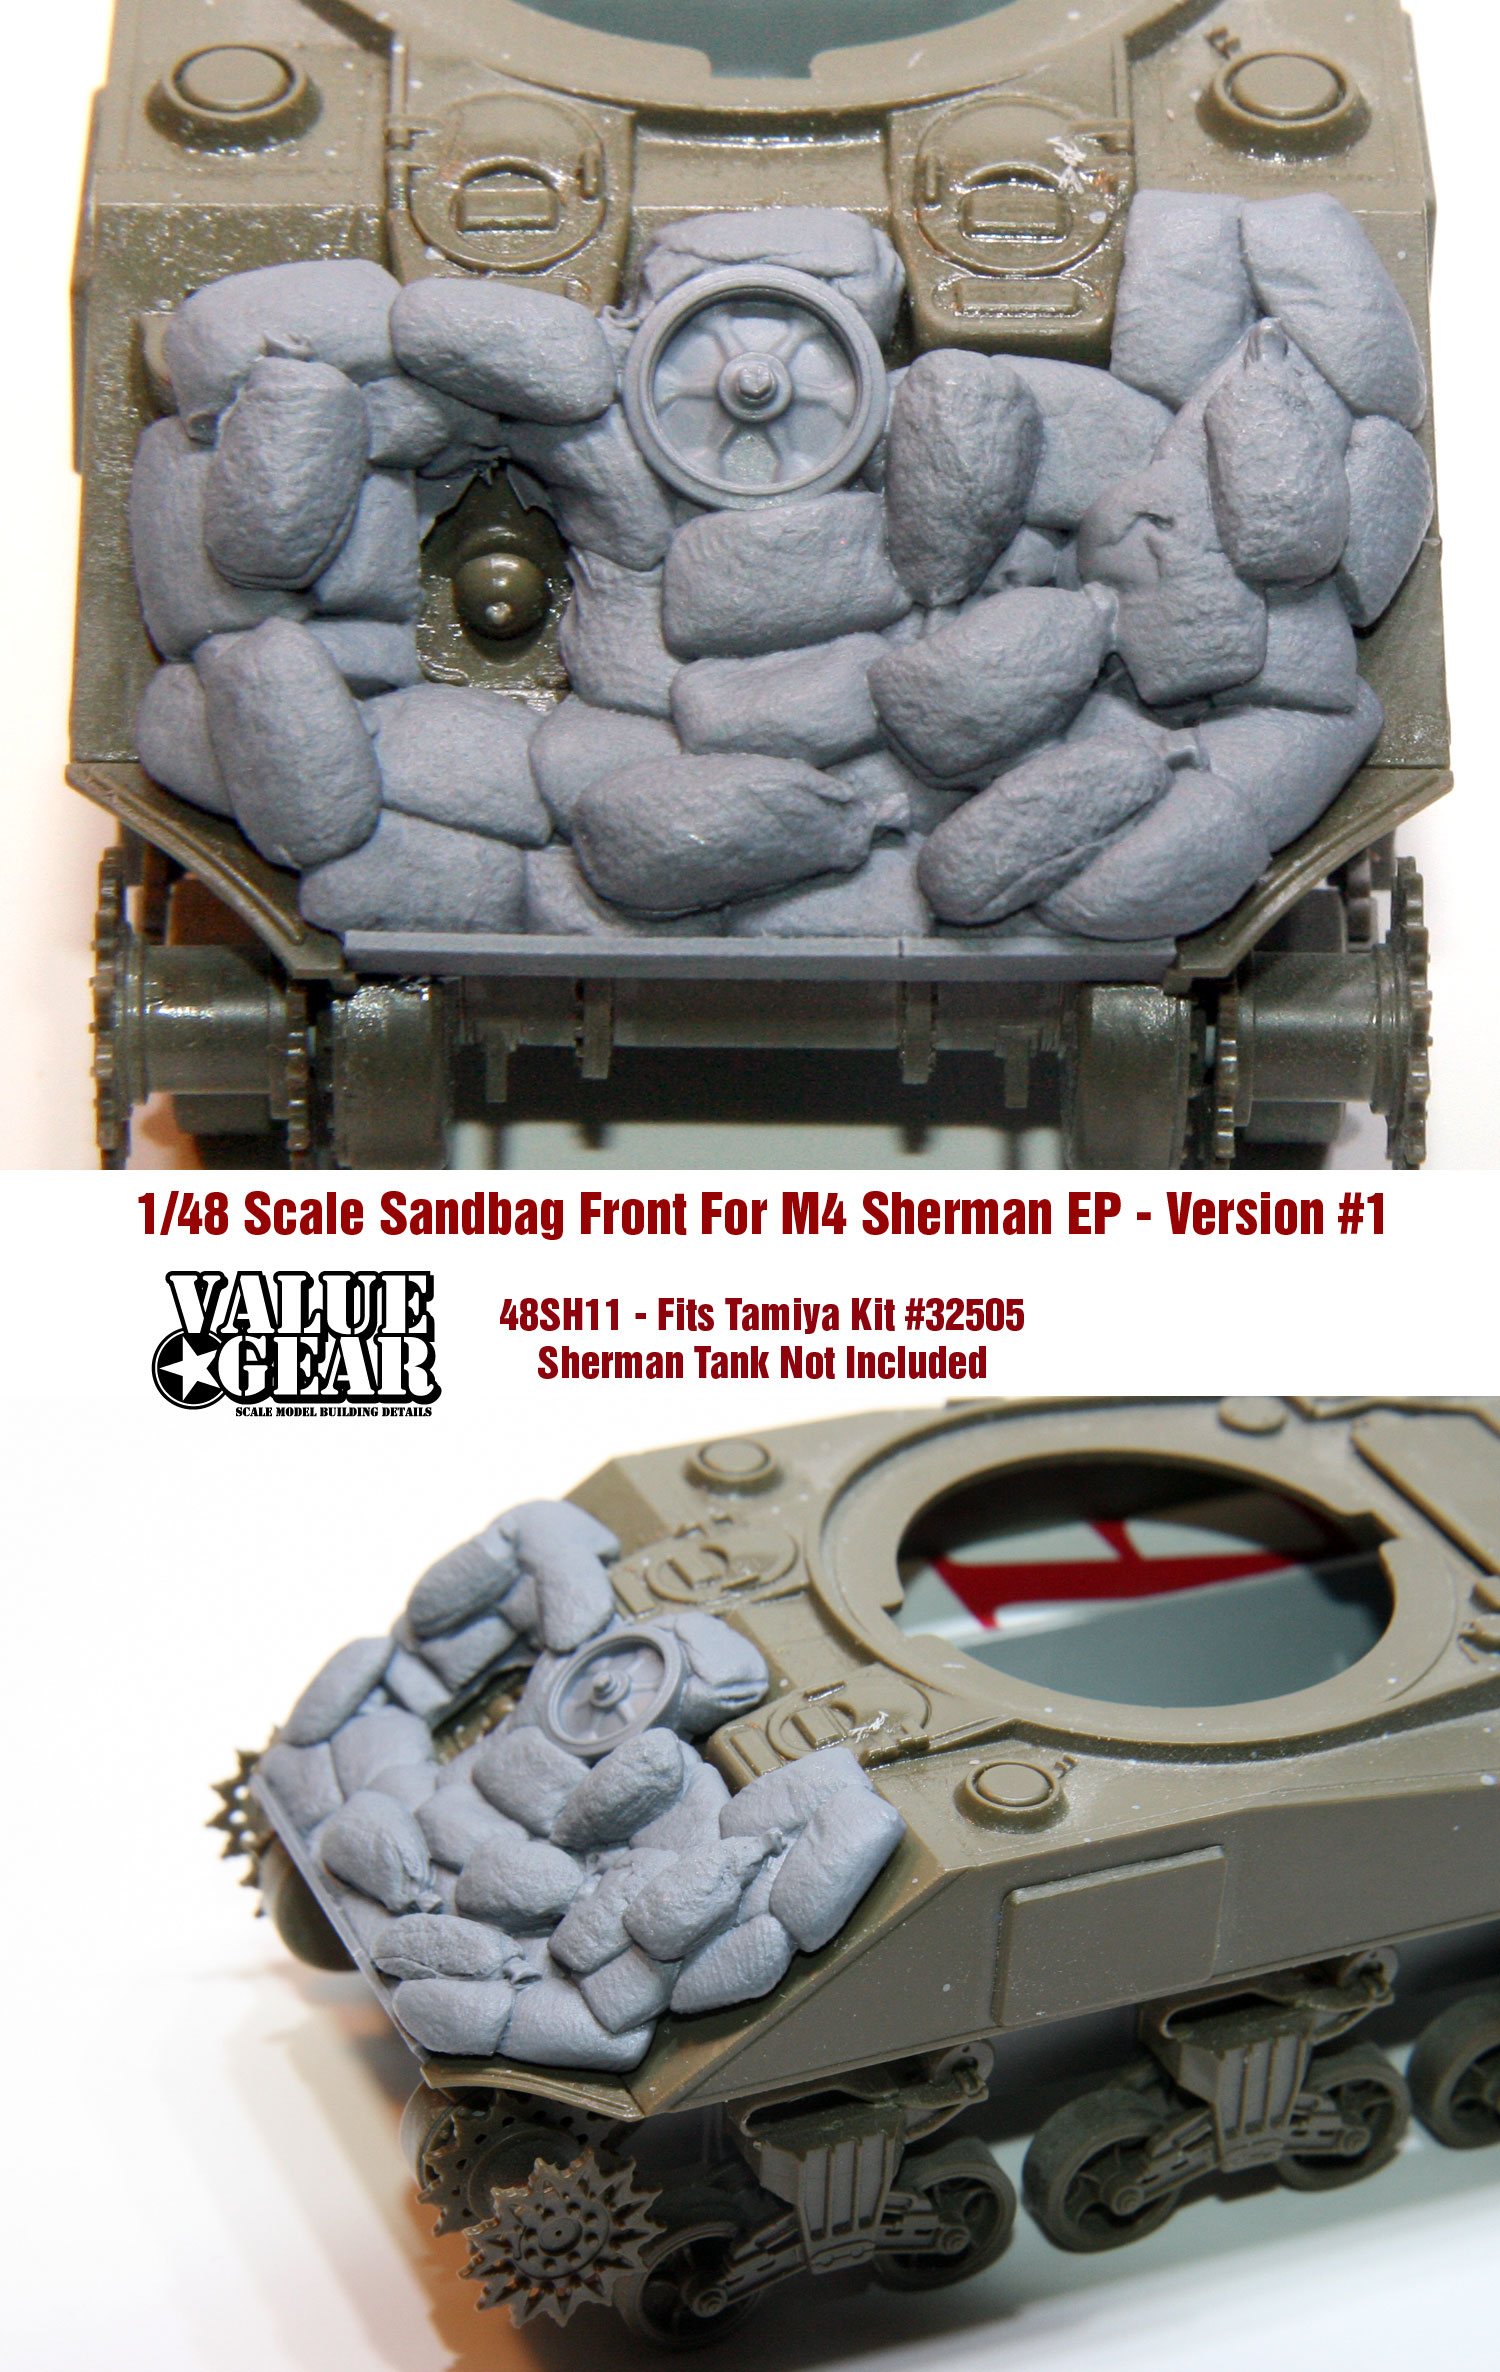 Value Gear 1/35 M10 Tank Destroyer Sandbag Fronts V3 for Tamiya kits